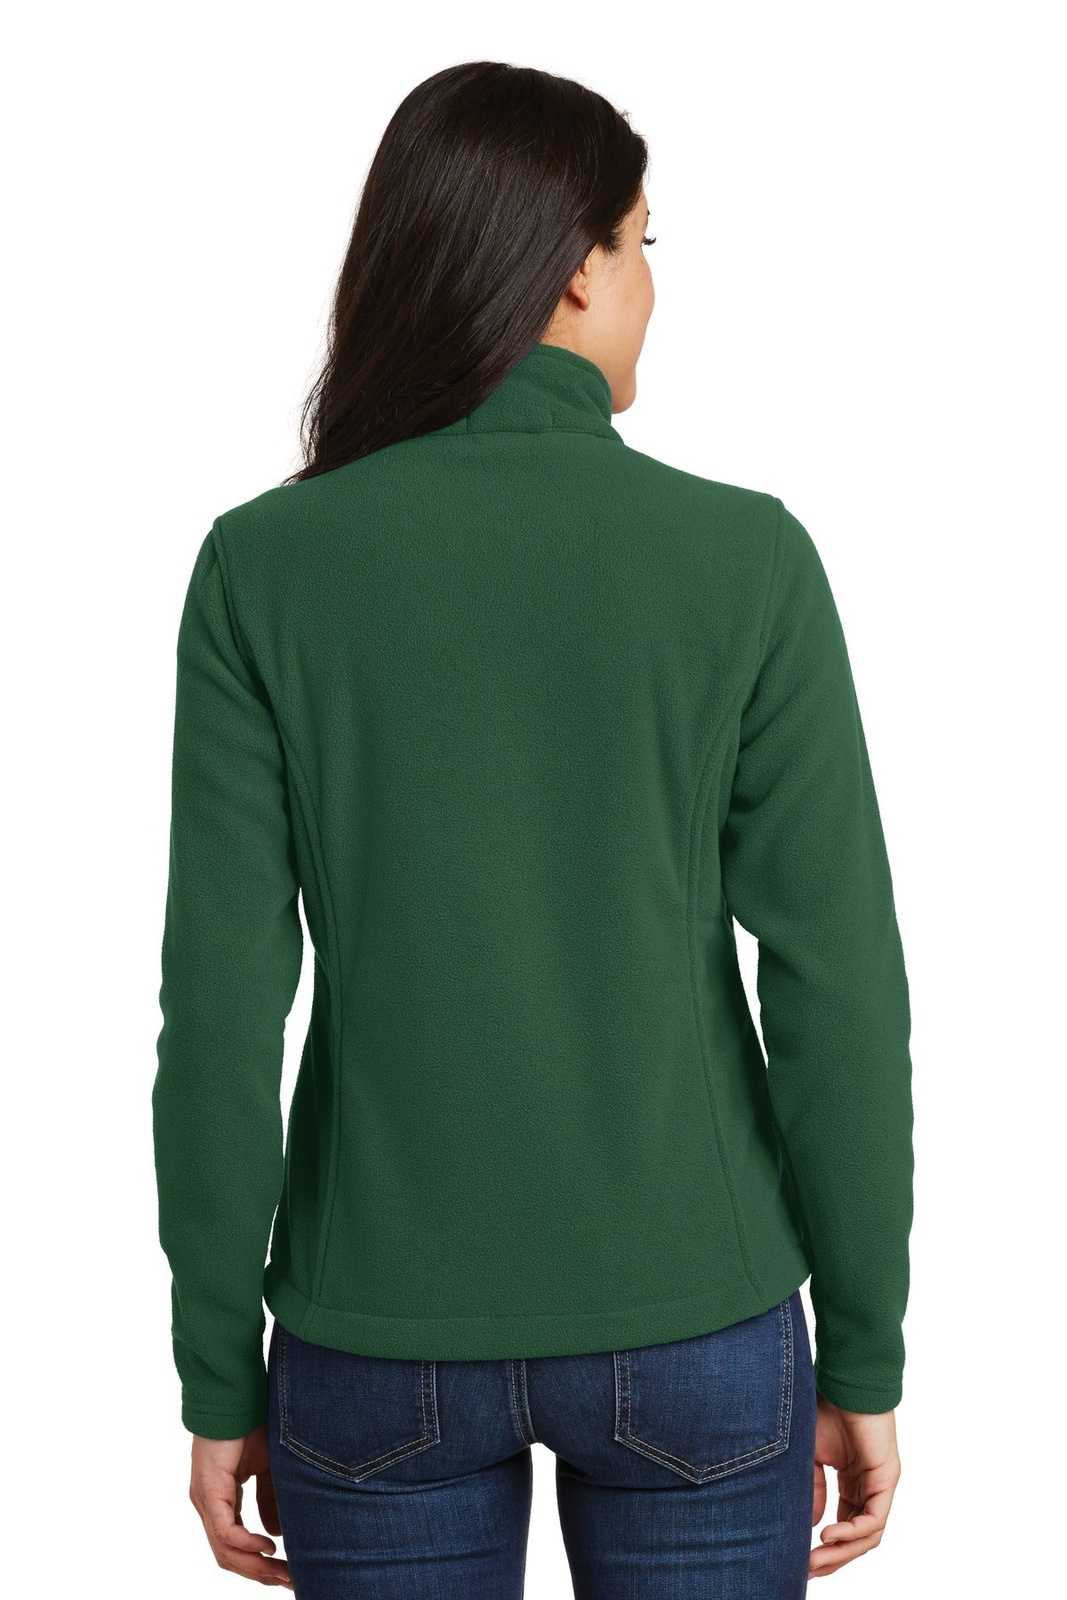 Port Authority L217 Ladies Value Fleece Jacket - Forest Green - HIT a Double - 1